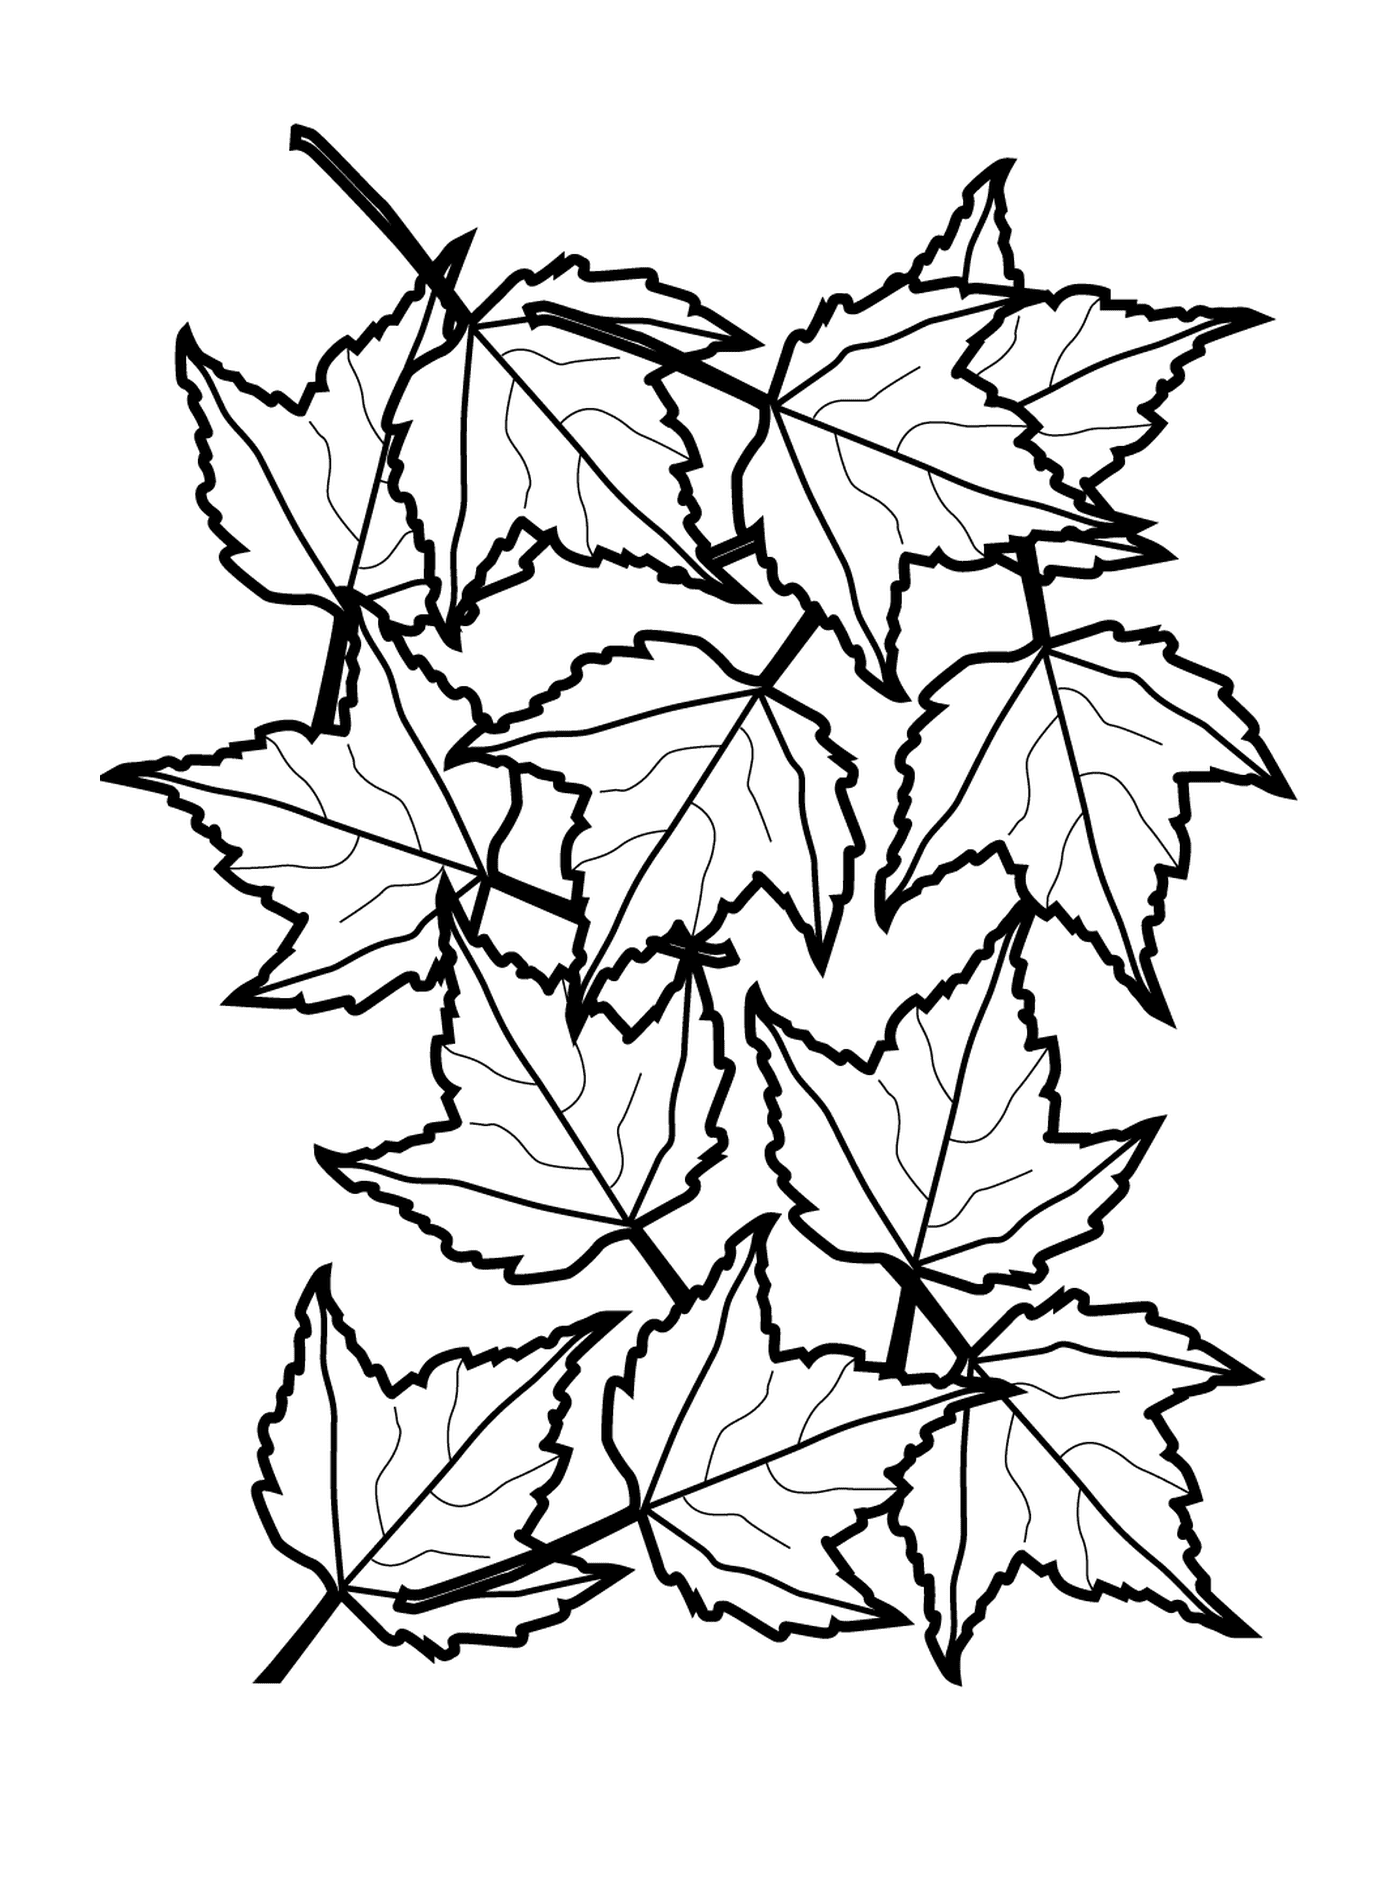   Une ligne de feuilles qui tombent 